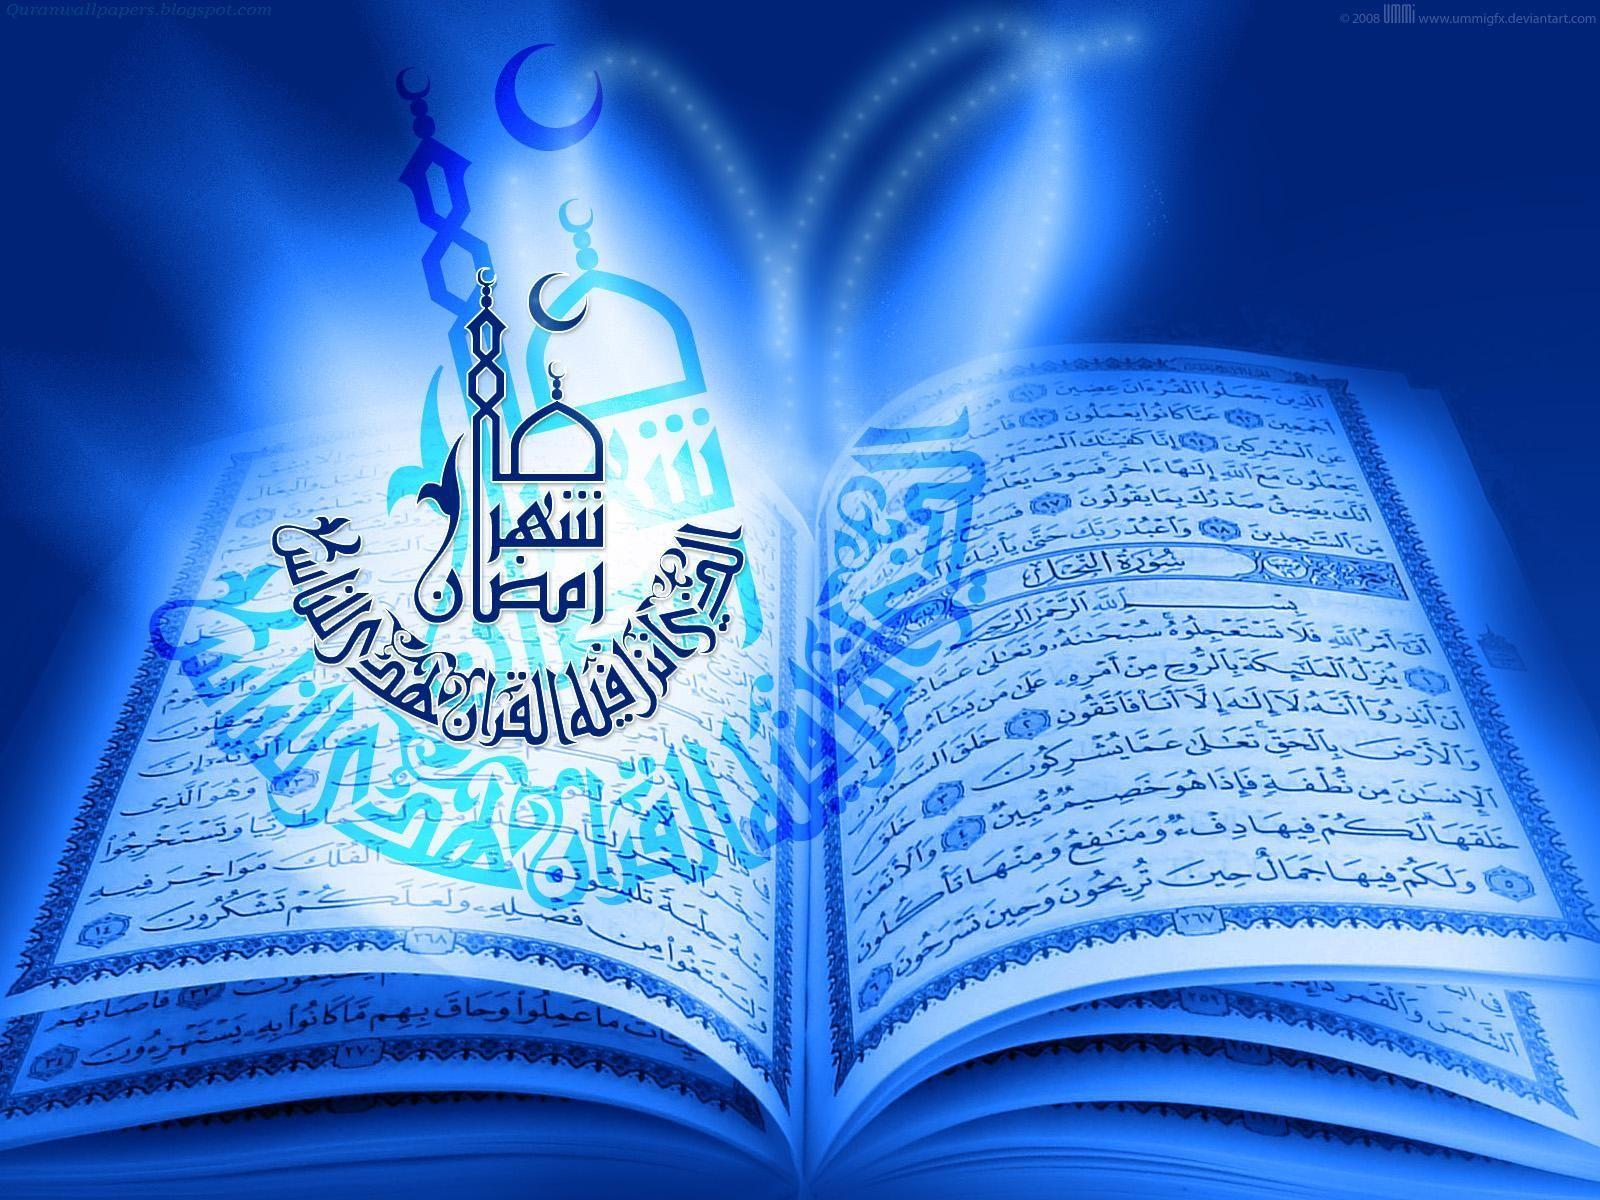 Ewallpaperhub provide the latest Quran Sharif Wallpaper. You can